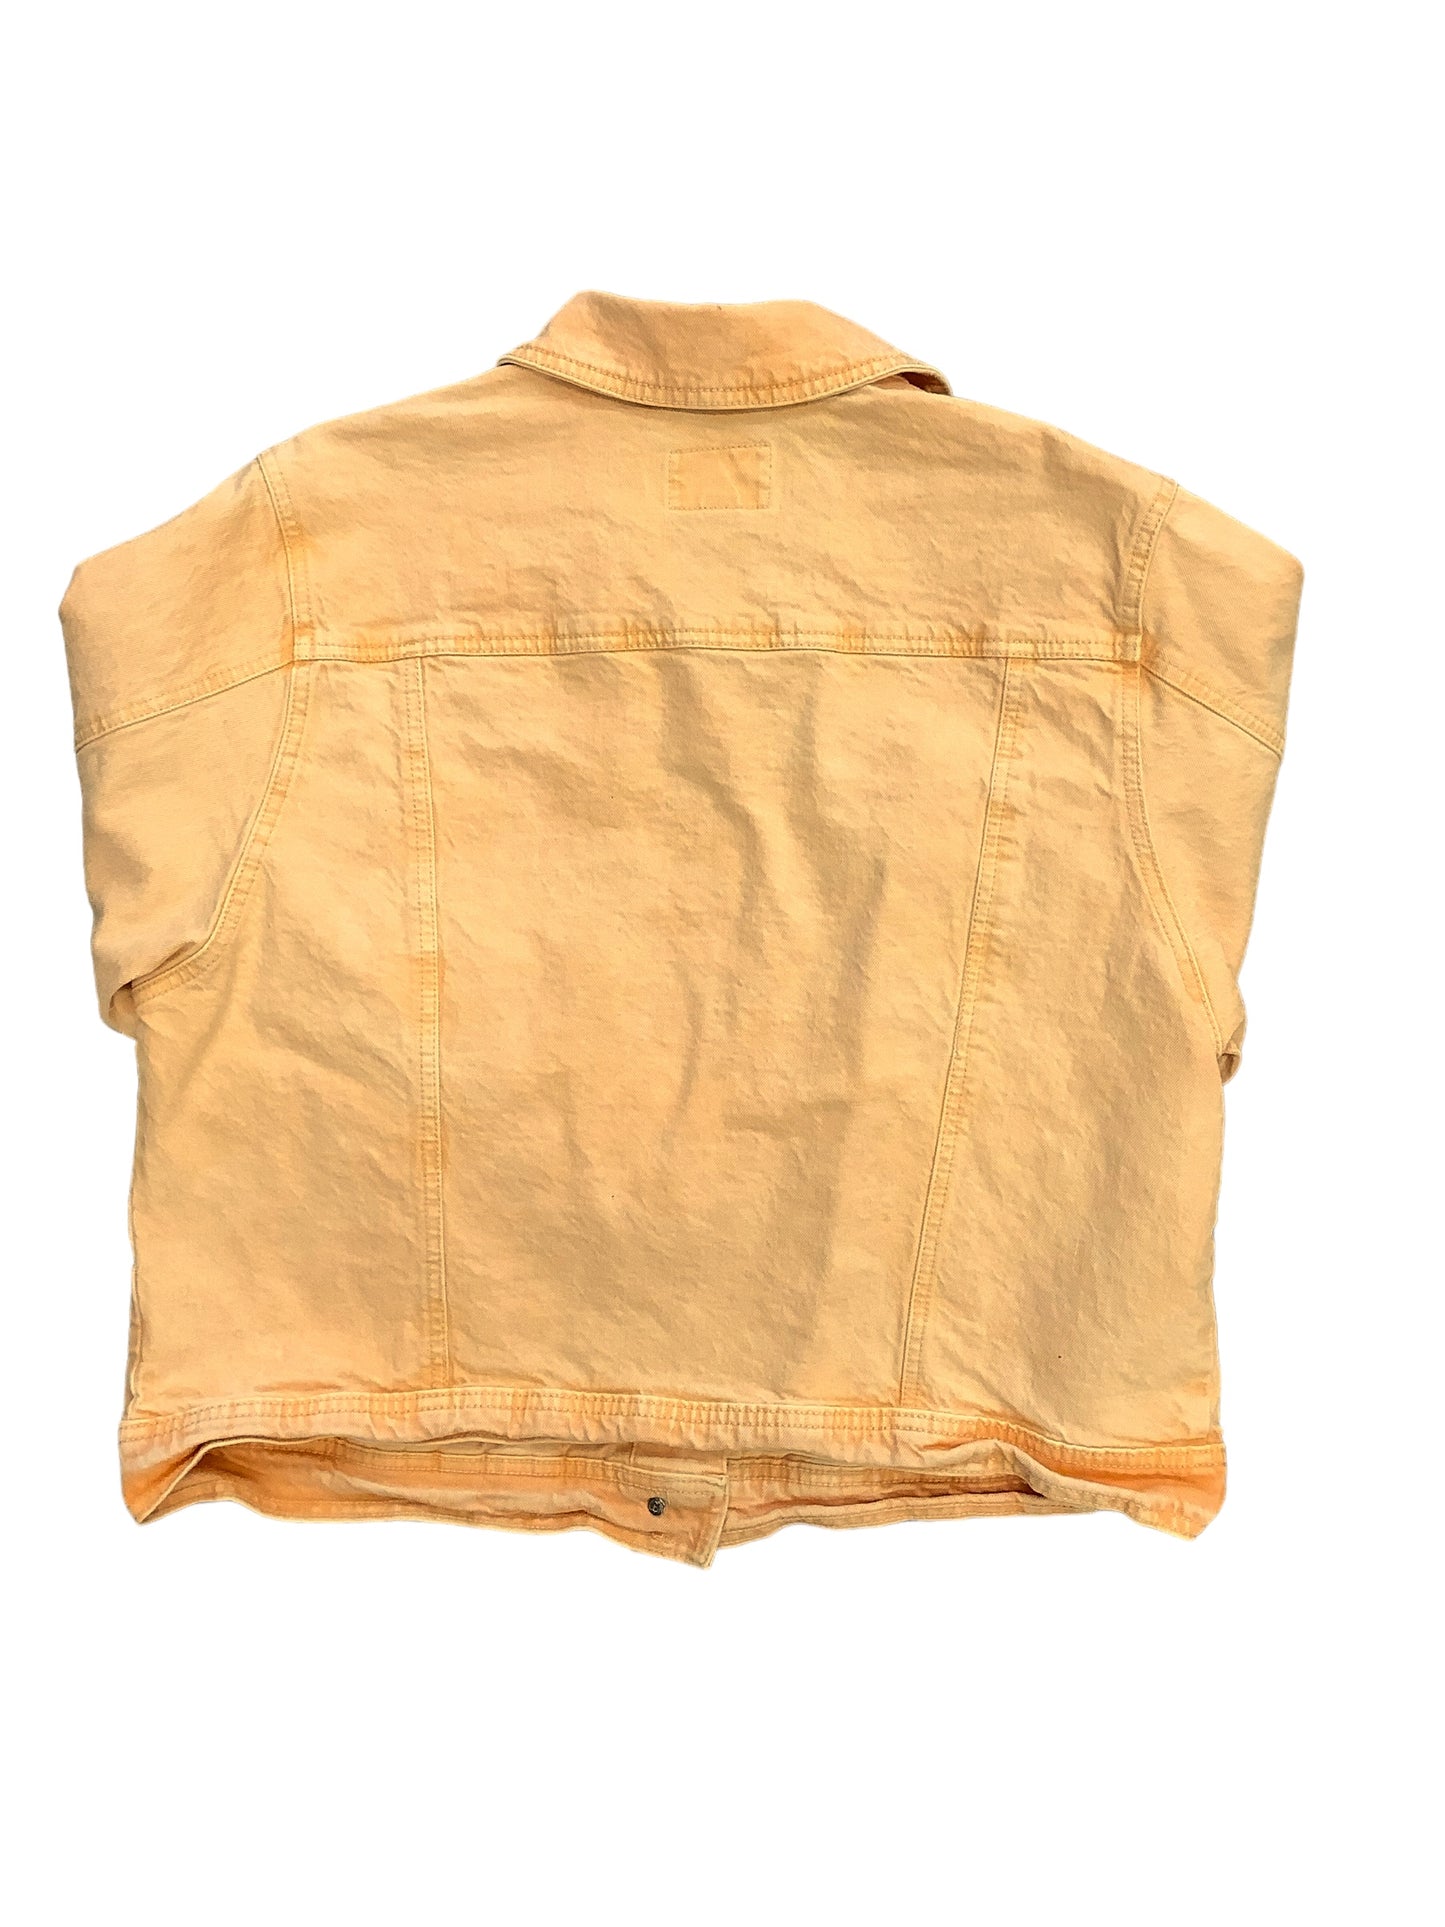 Jacket Denim By Universal Thread  Size: Xl